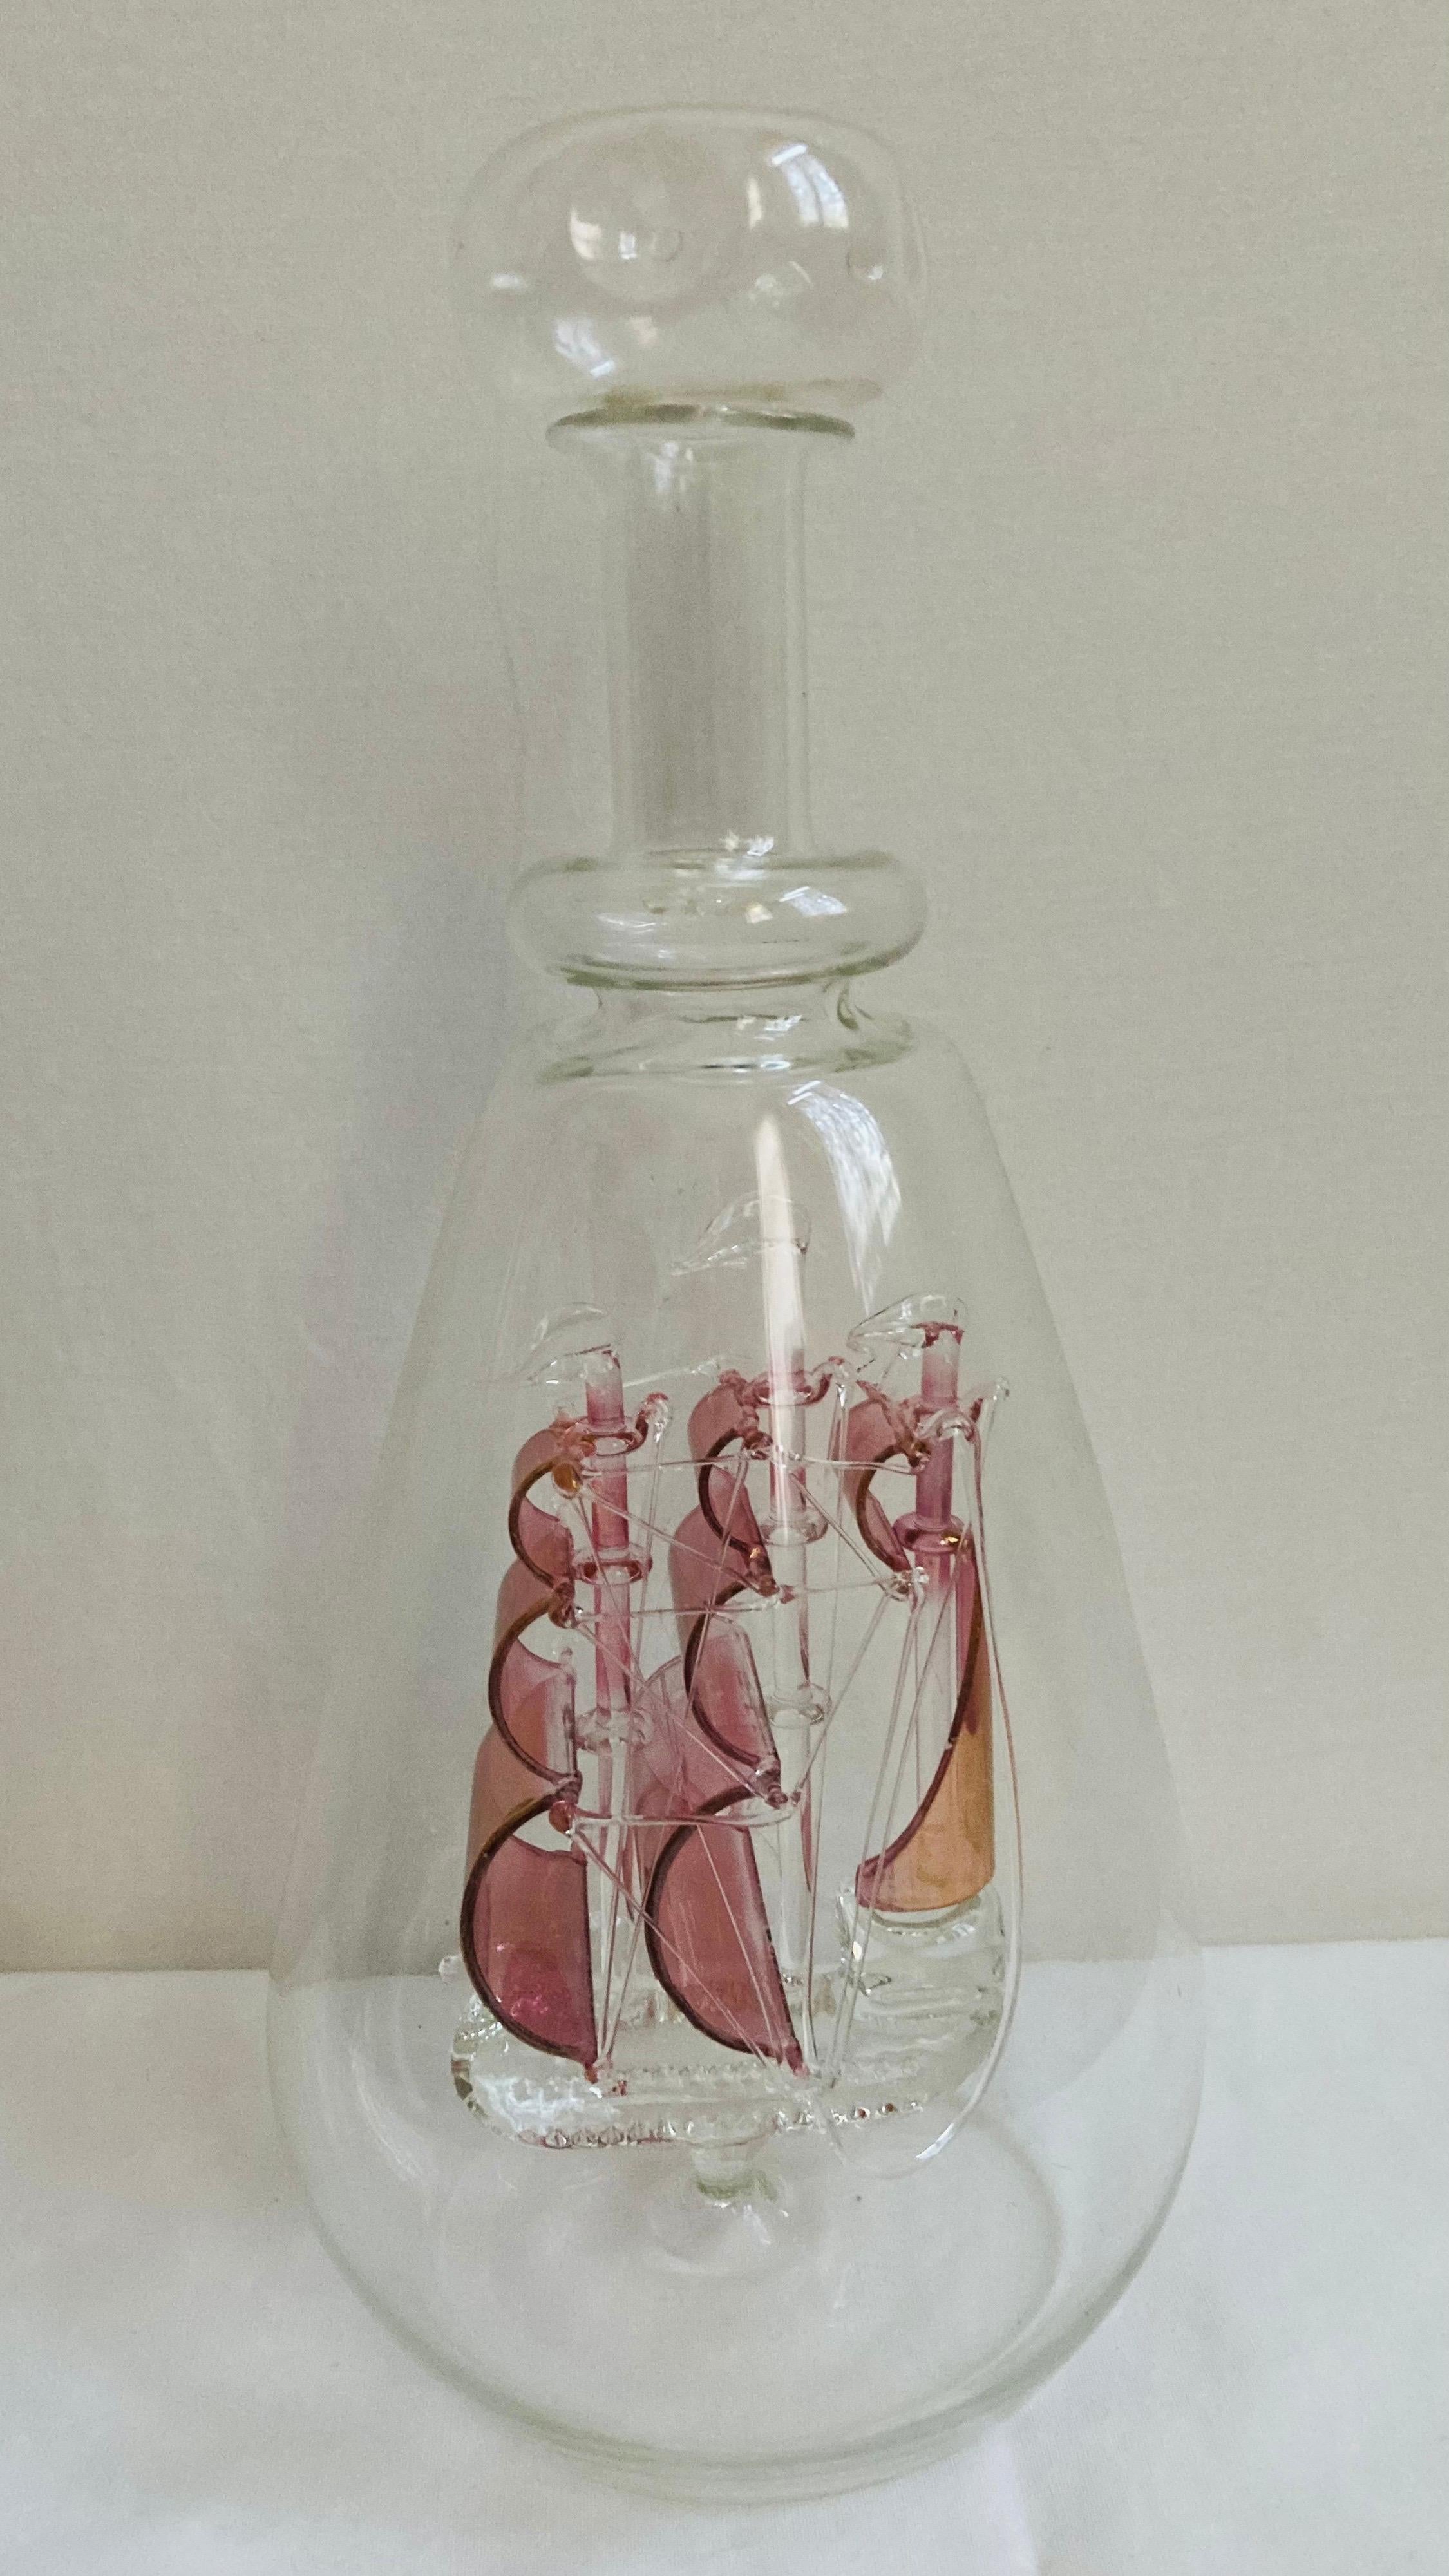 Beautiful art deco vitange glass ship in the botlle perfect condition beautiful decor.